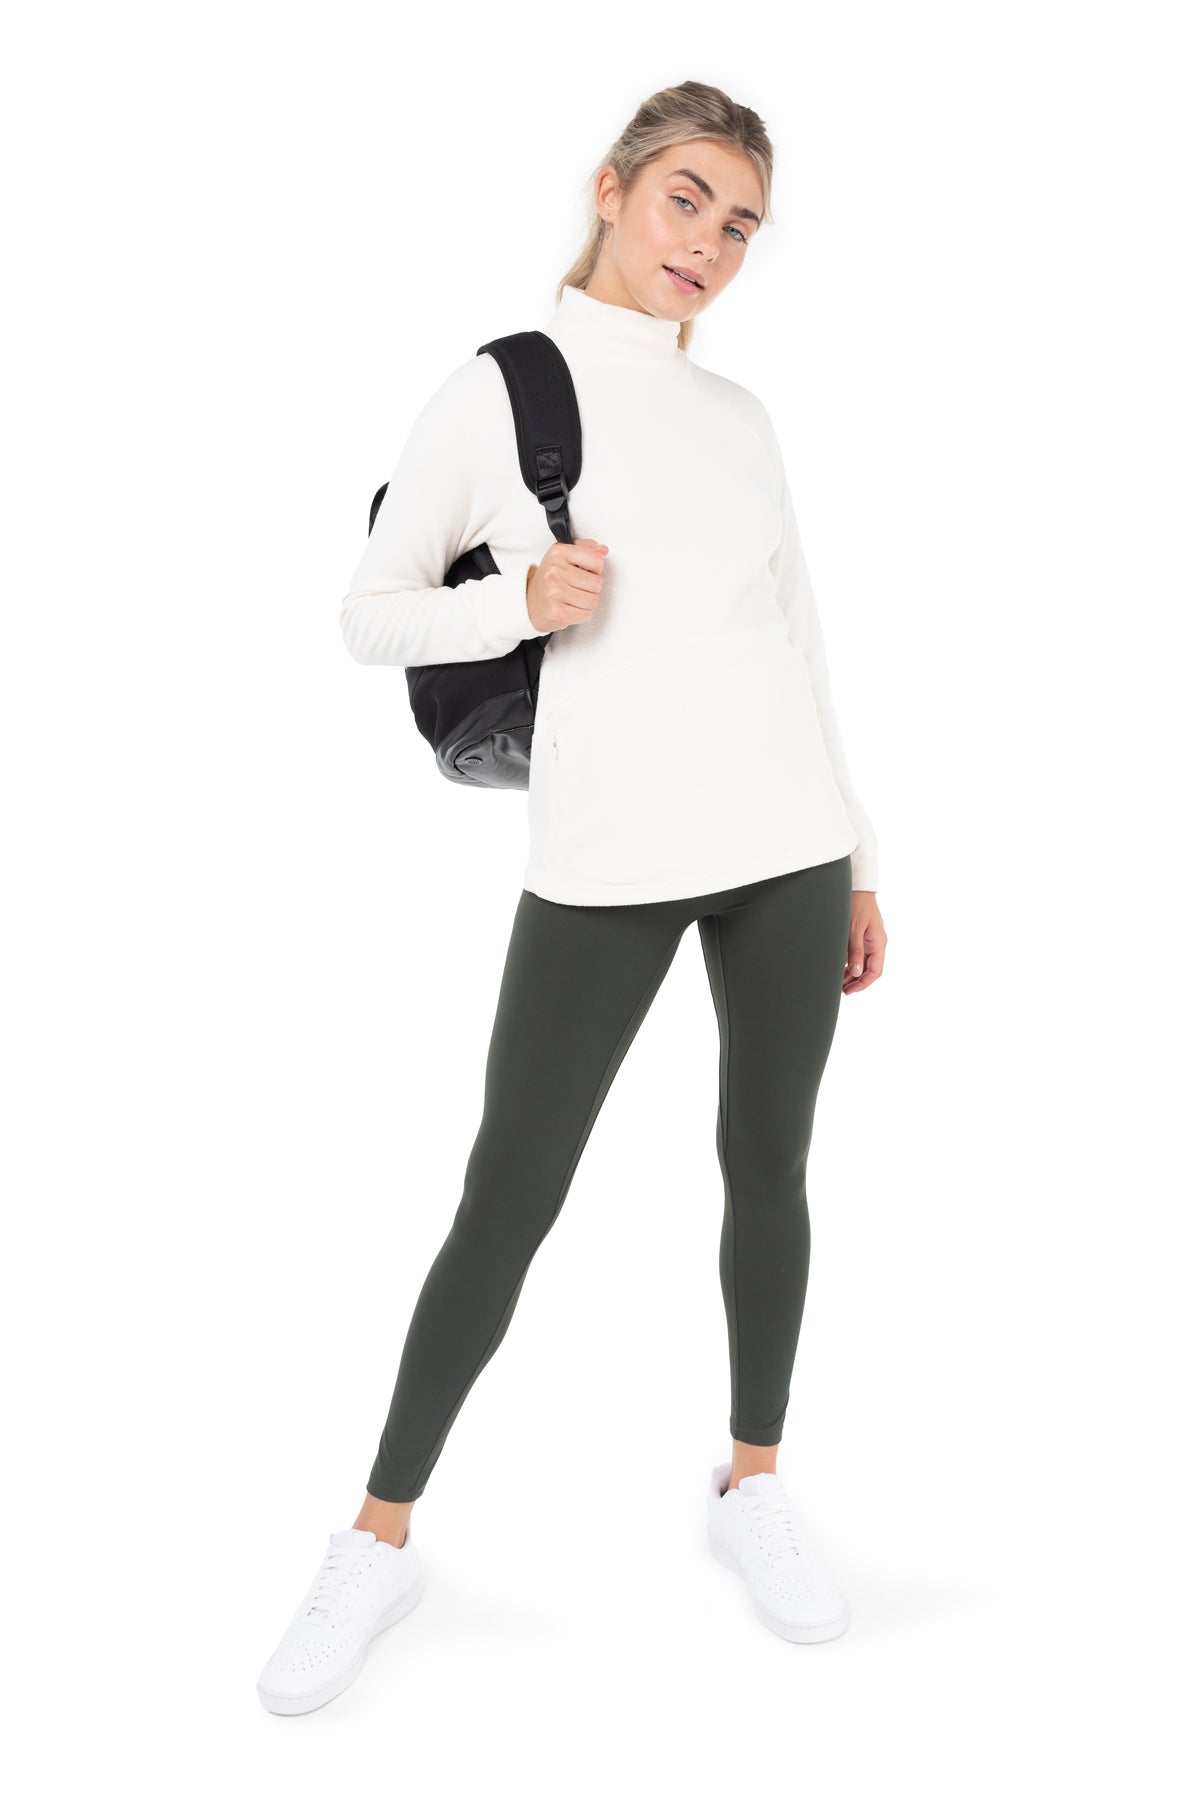 NWT $68 Women's Kyodan Yoga Active Leggings Warm Herringbone Dark Gray XS S  L XL